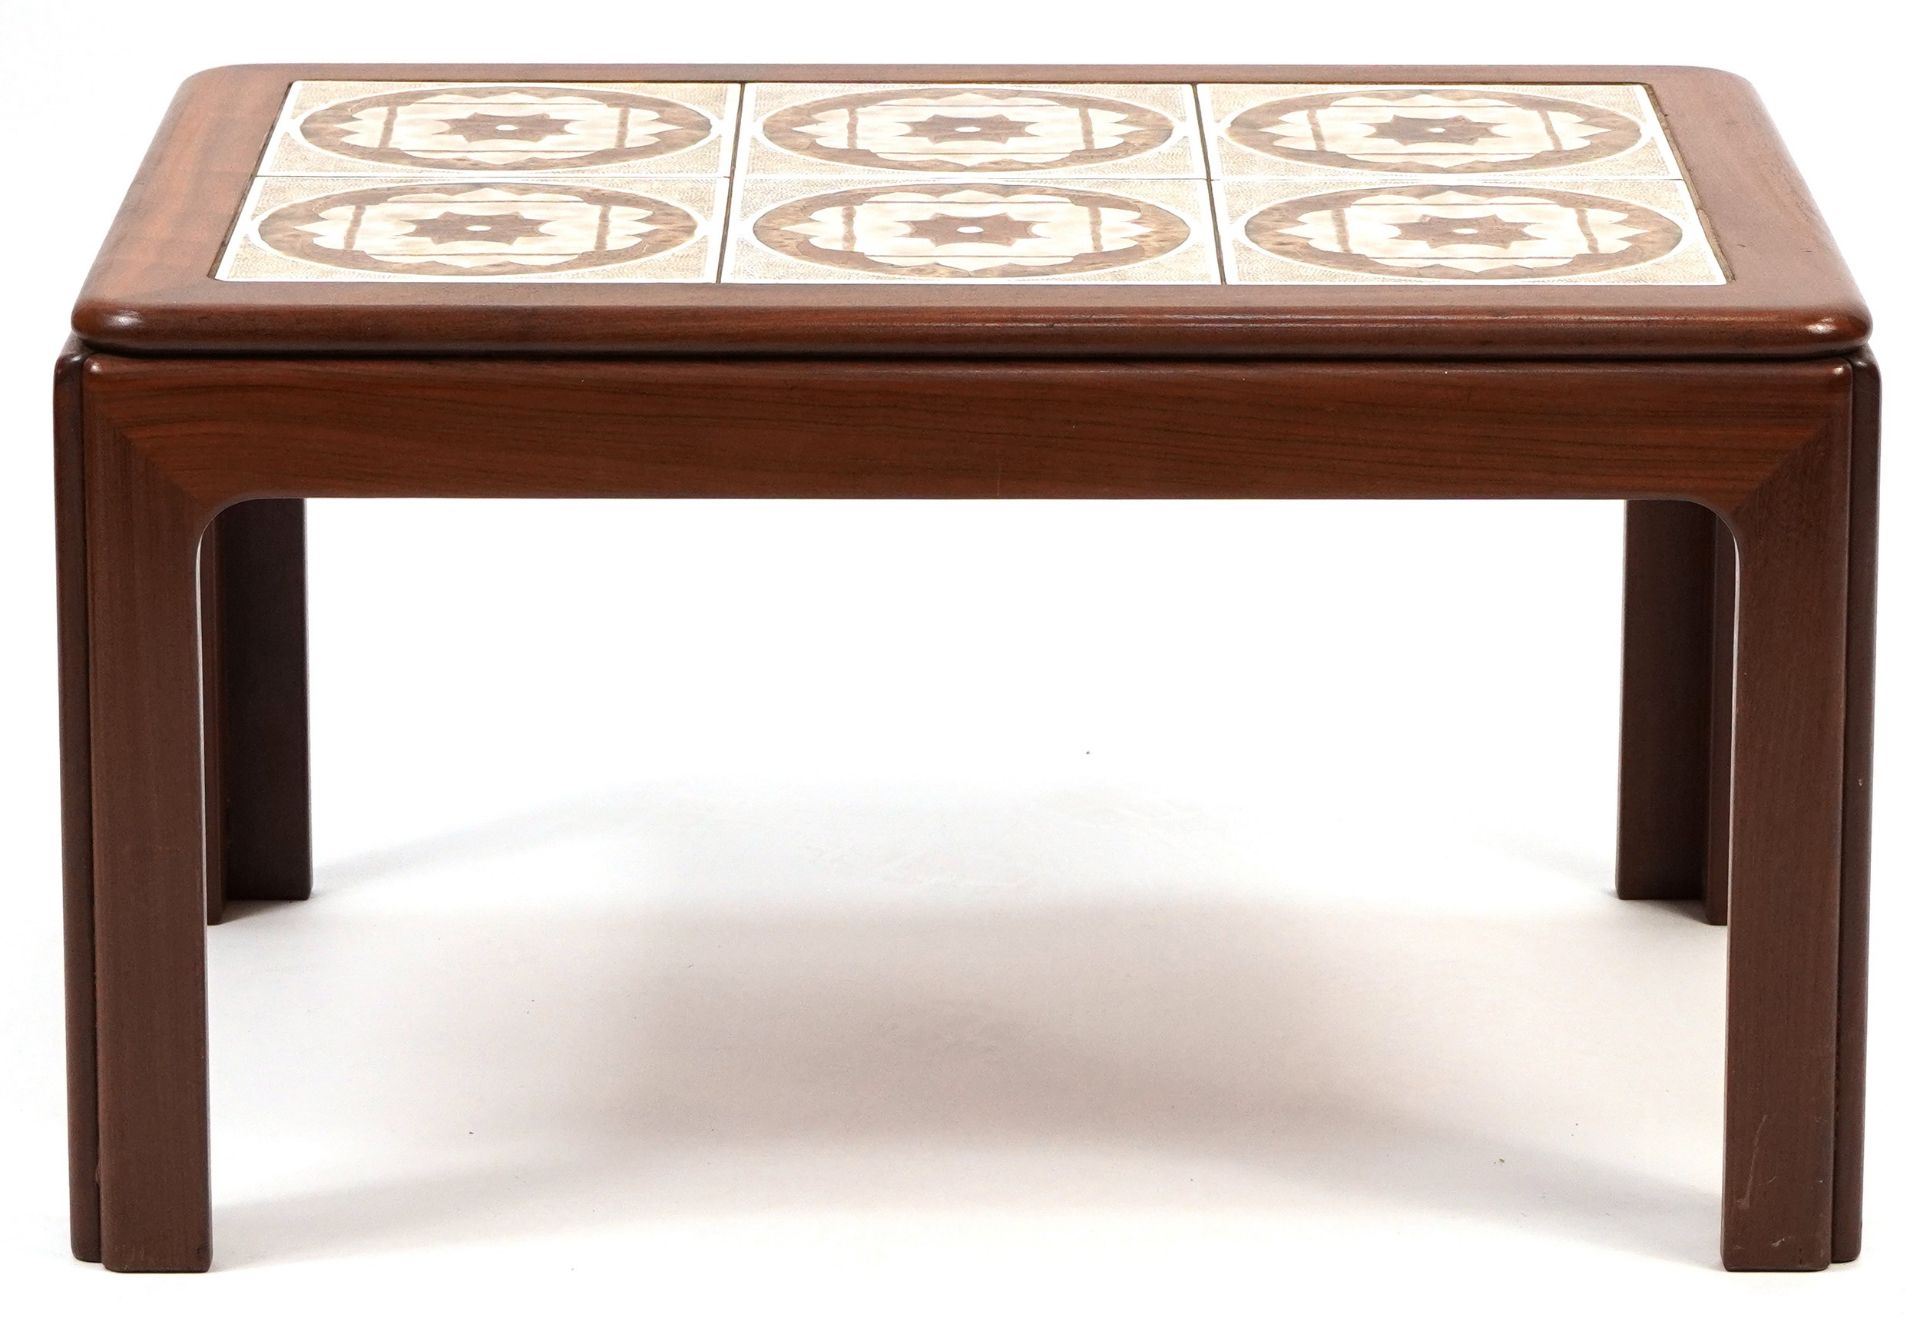 Mid century teak tile top coffee table, probably G Plan, 40cm H x 71cm W x 51cm D - Image 2 of 4